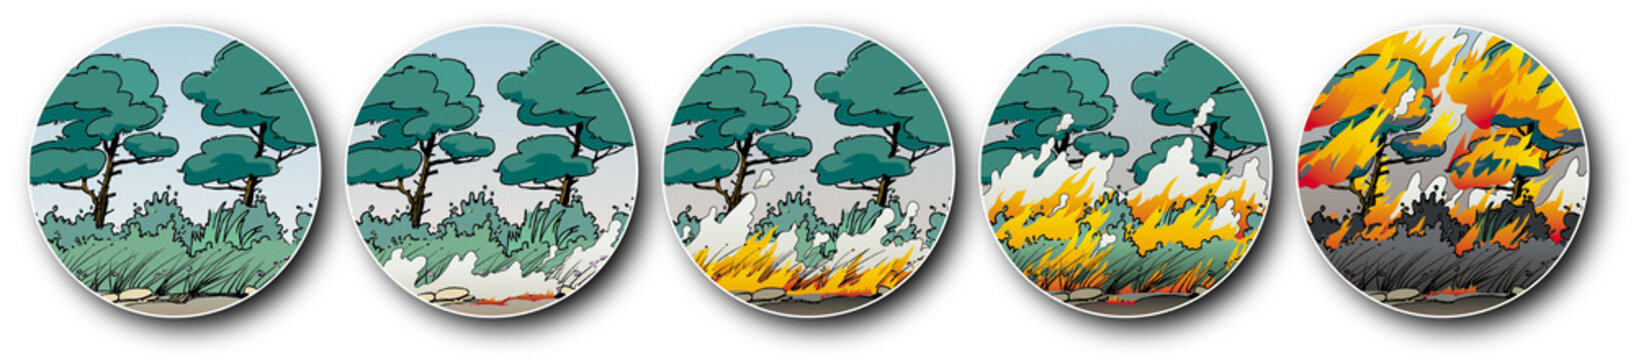 Incendies de forêts - La propagation du feu 1